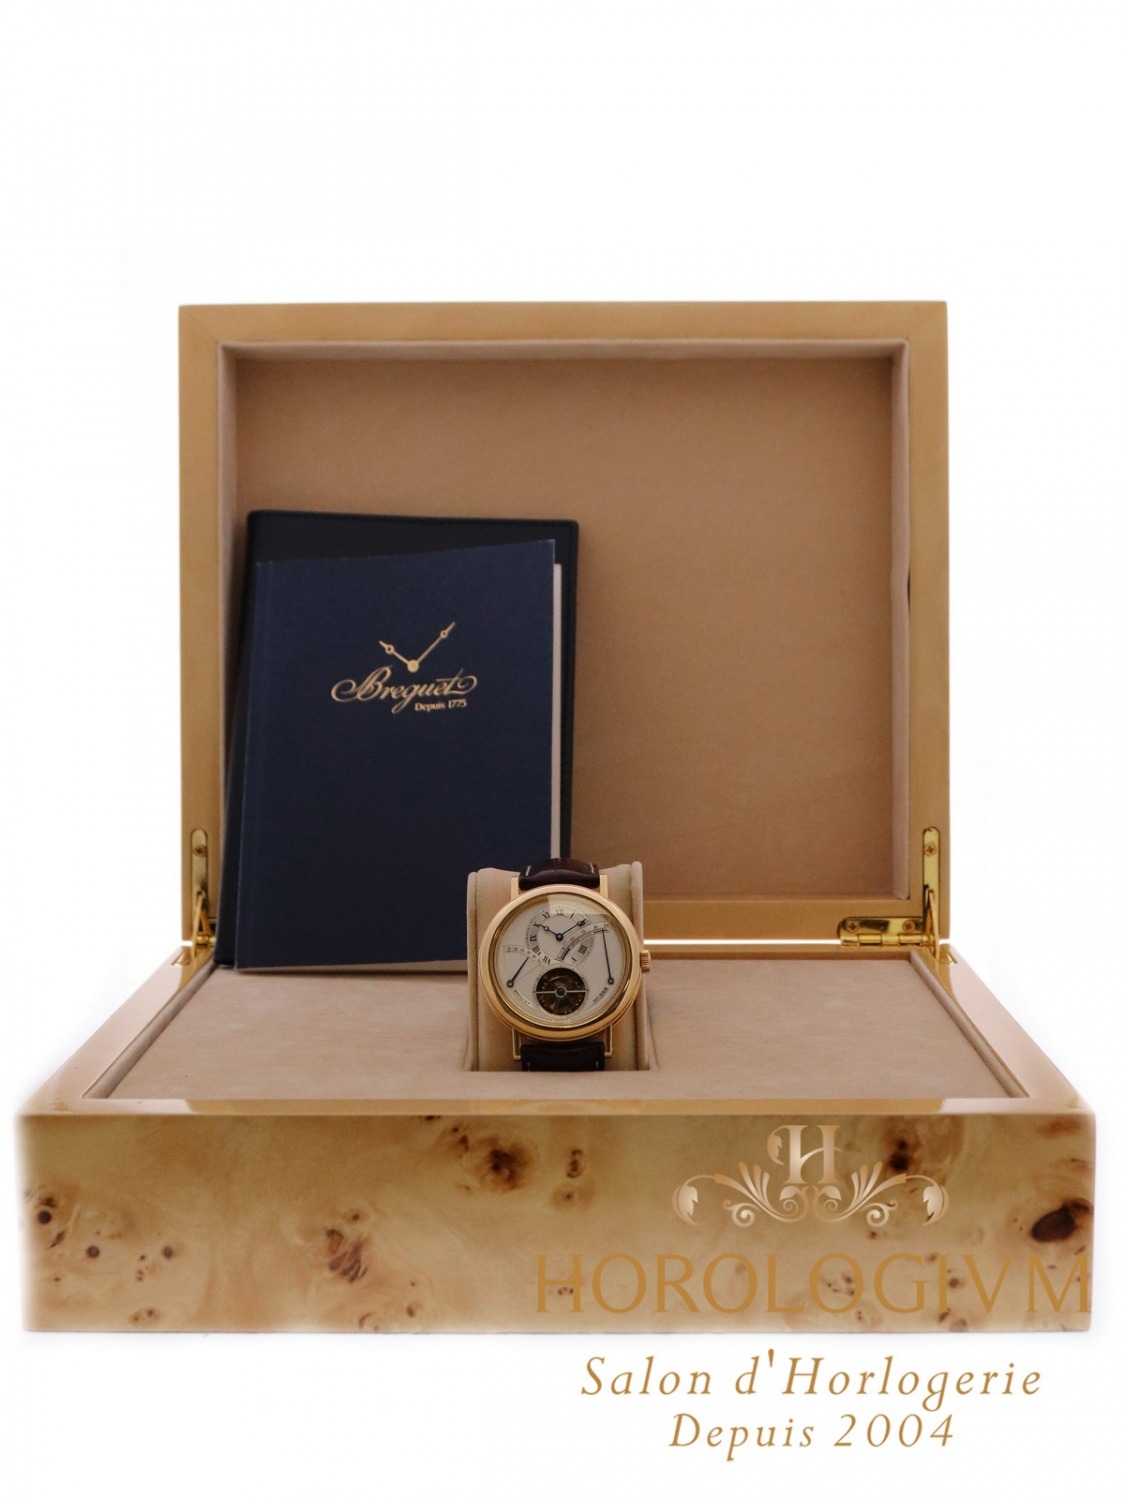 Breguet Classique Grande Complication Tourbillon watch, yellow gold